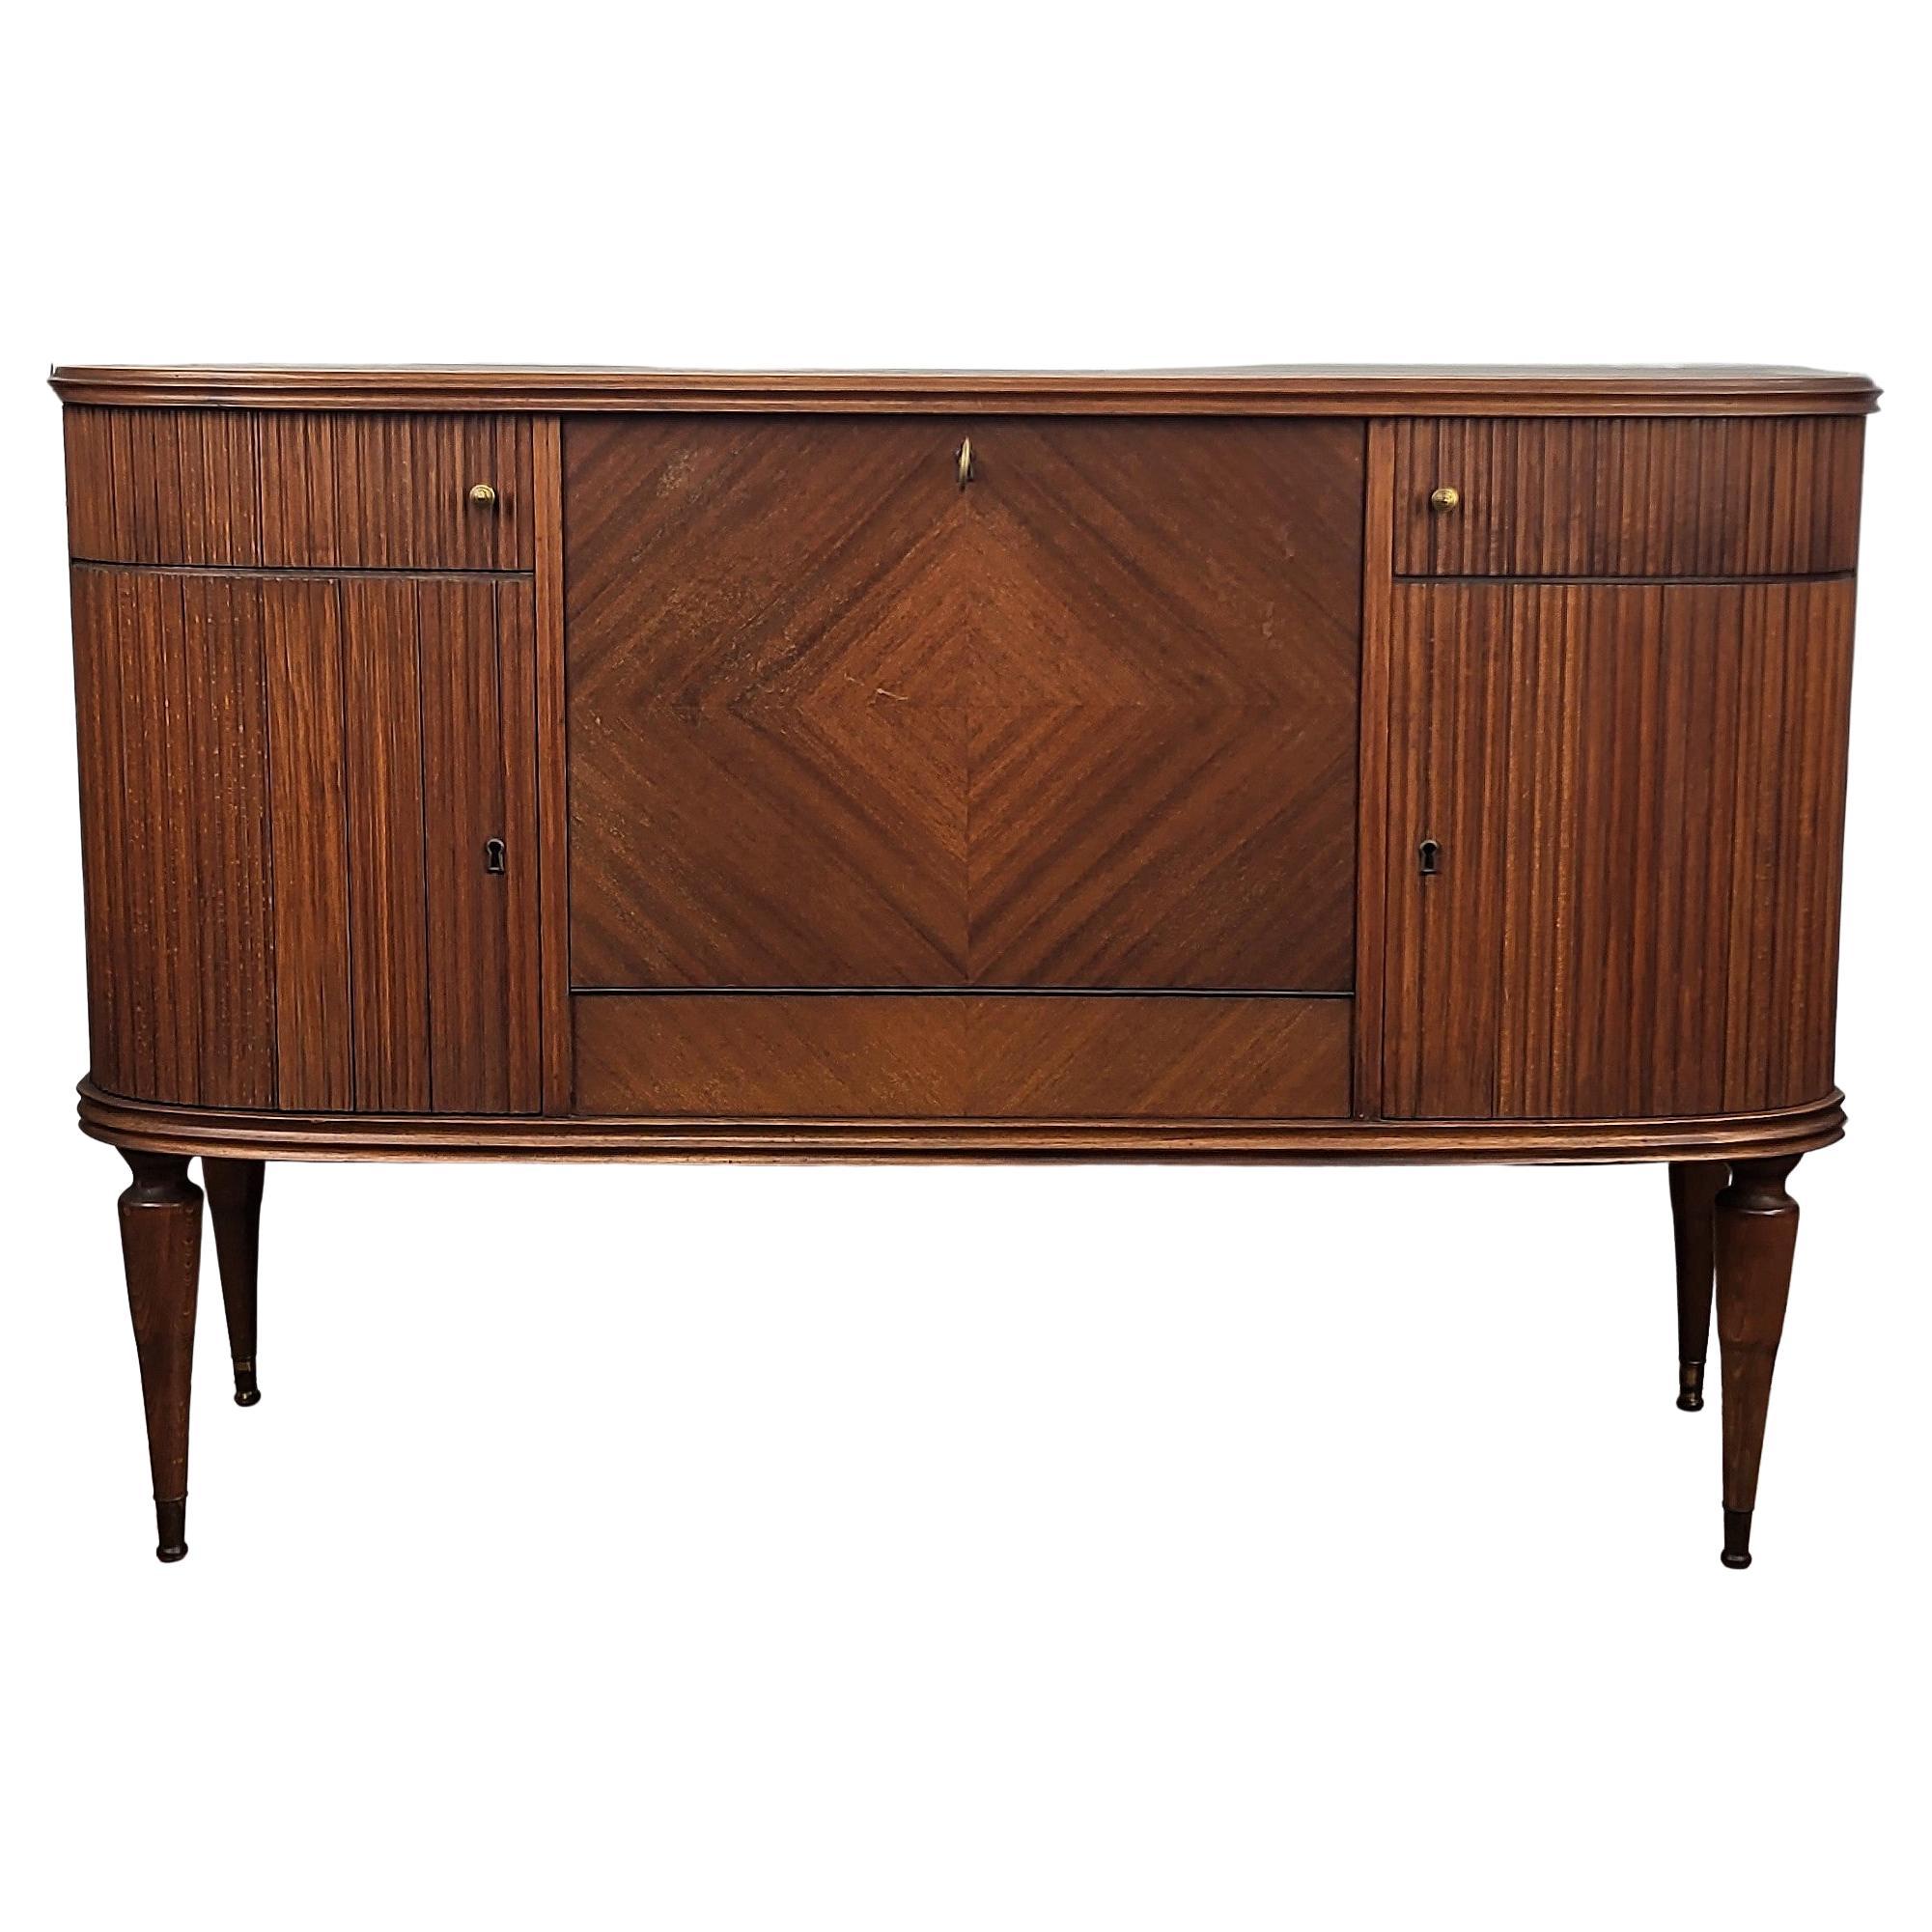 Italian 1940s Art Deco Mid-Century Walnut Slatted Carved Dry Bar Cabinet